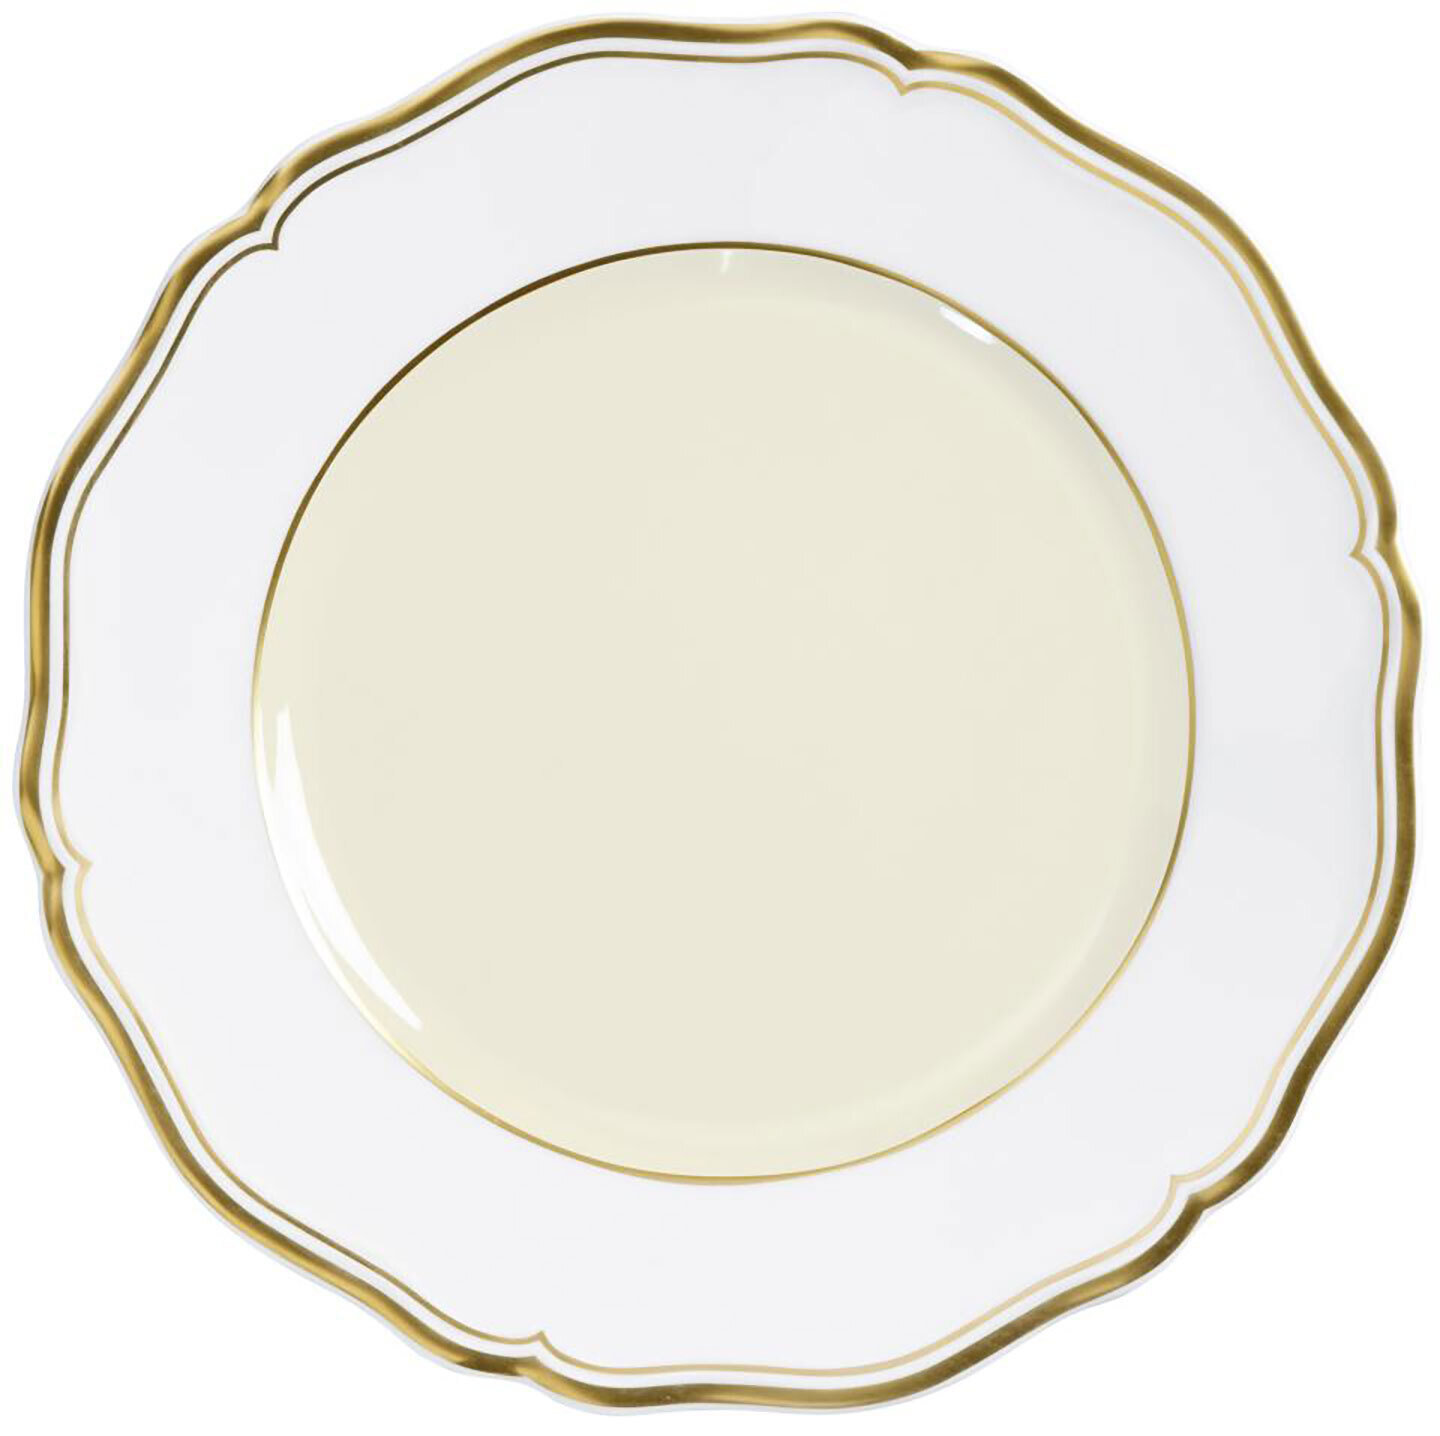 Raynaud Limoges Mazurka Or Ivory Dessert Plate 8.7 Inch 0866-01-101022